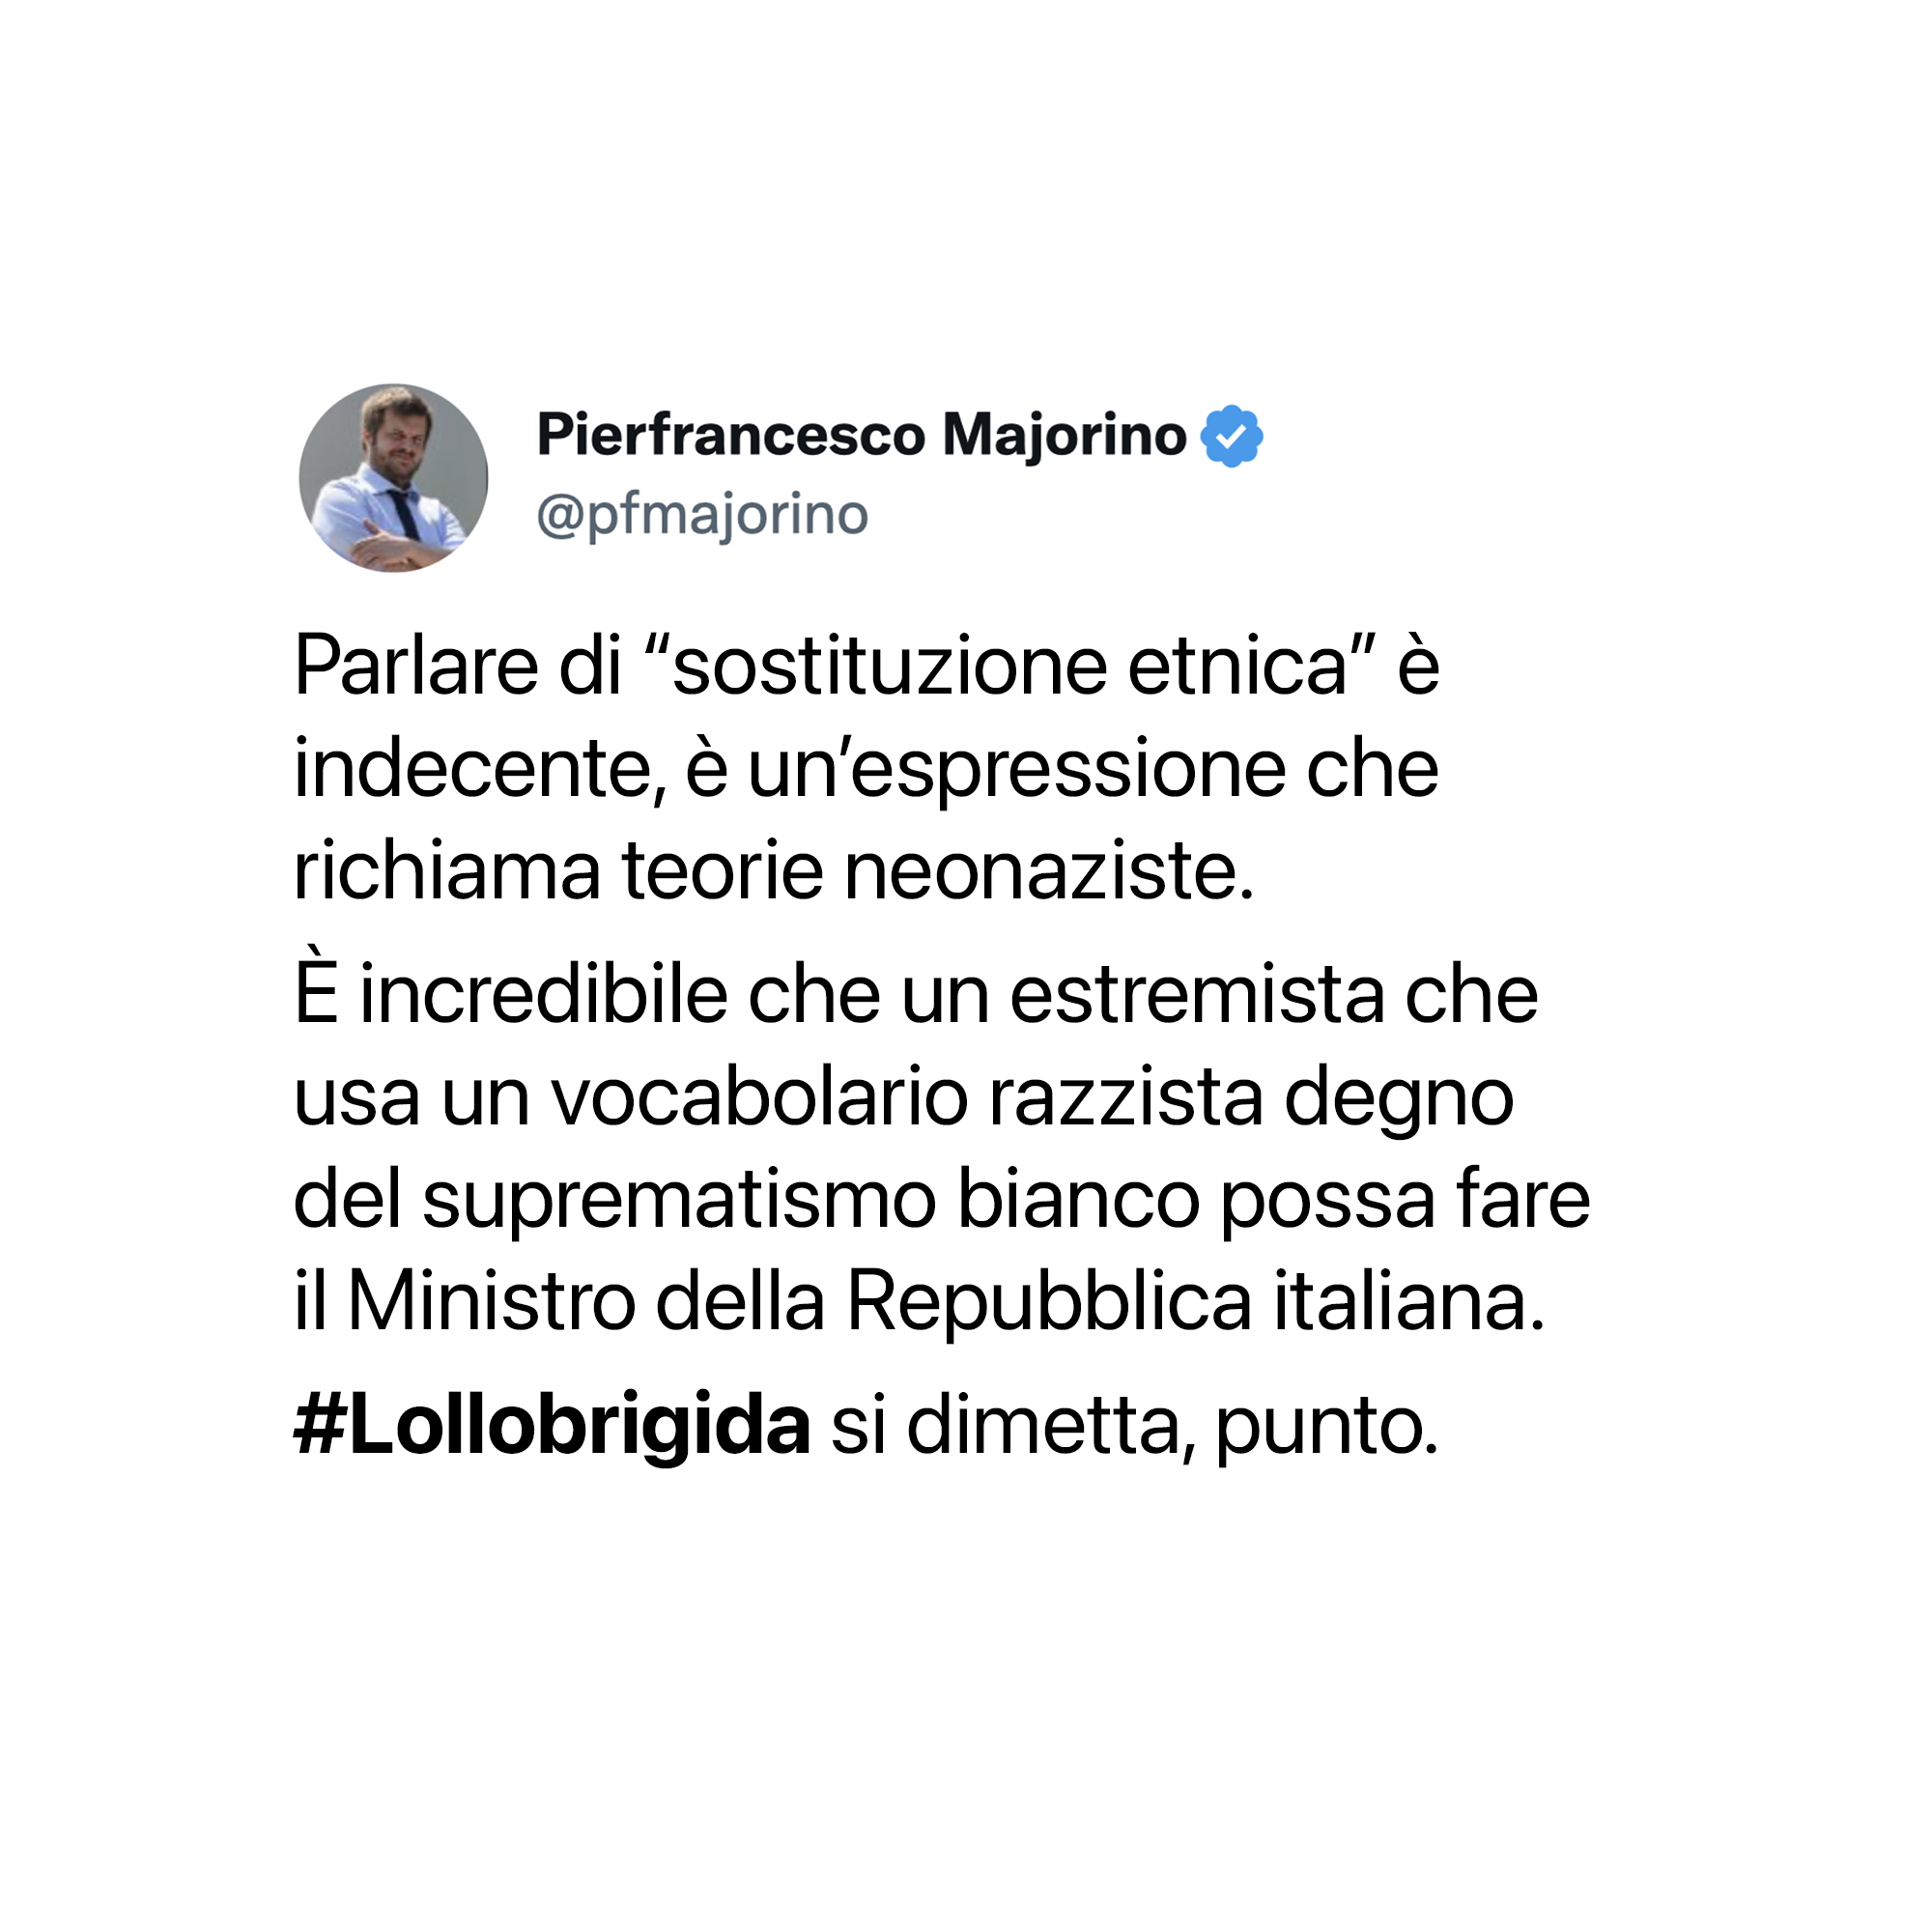 Il vocabolario razzista del Ministro Lollobrigida